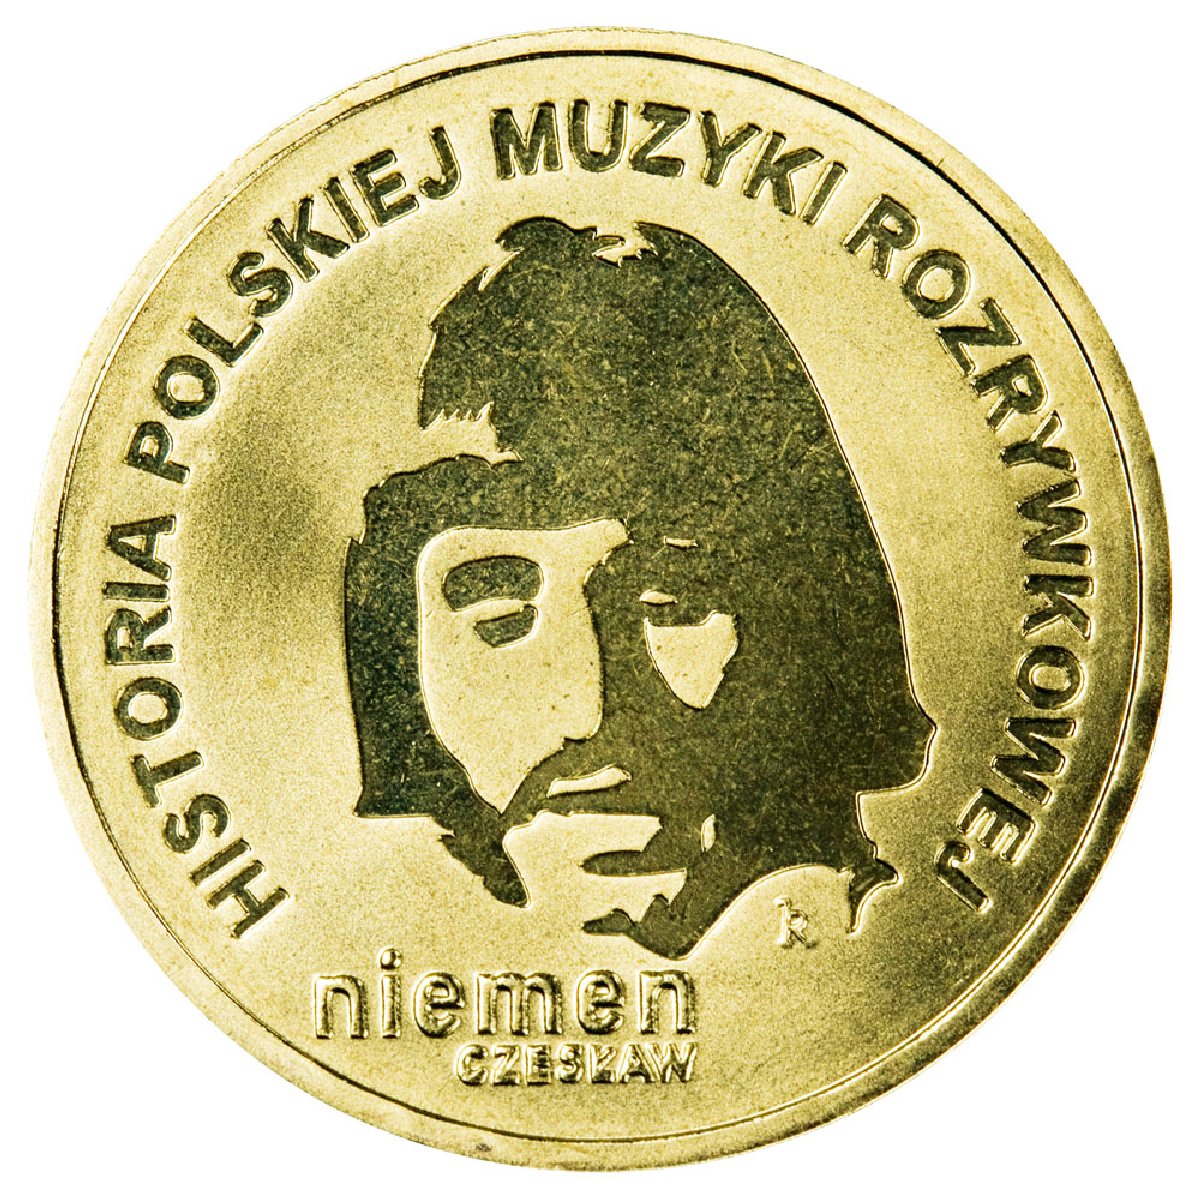 2zl-czeslaw-niemen-rewers-monety